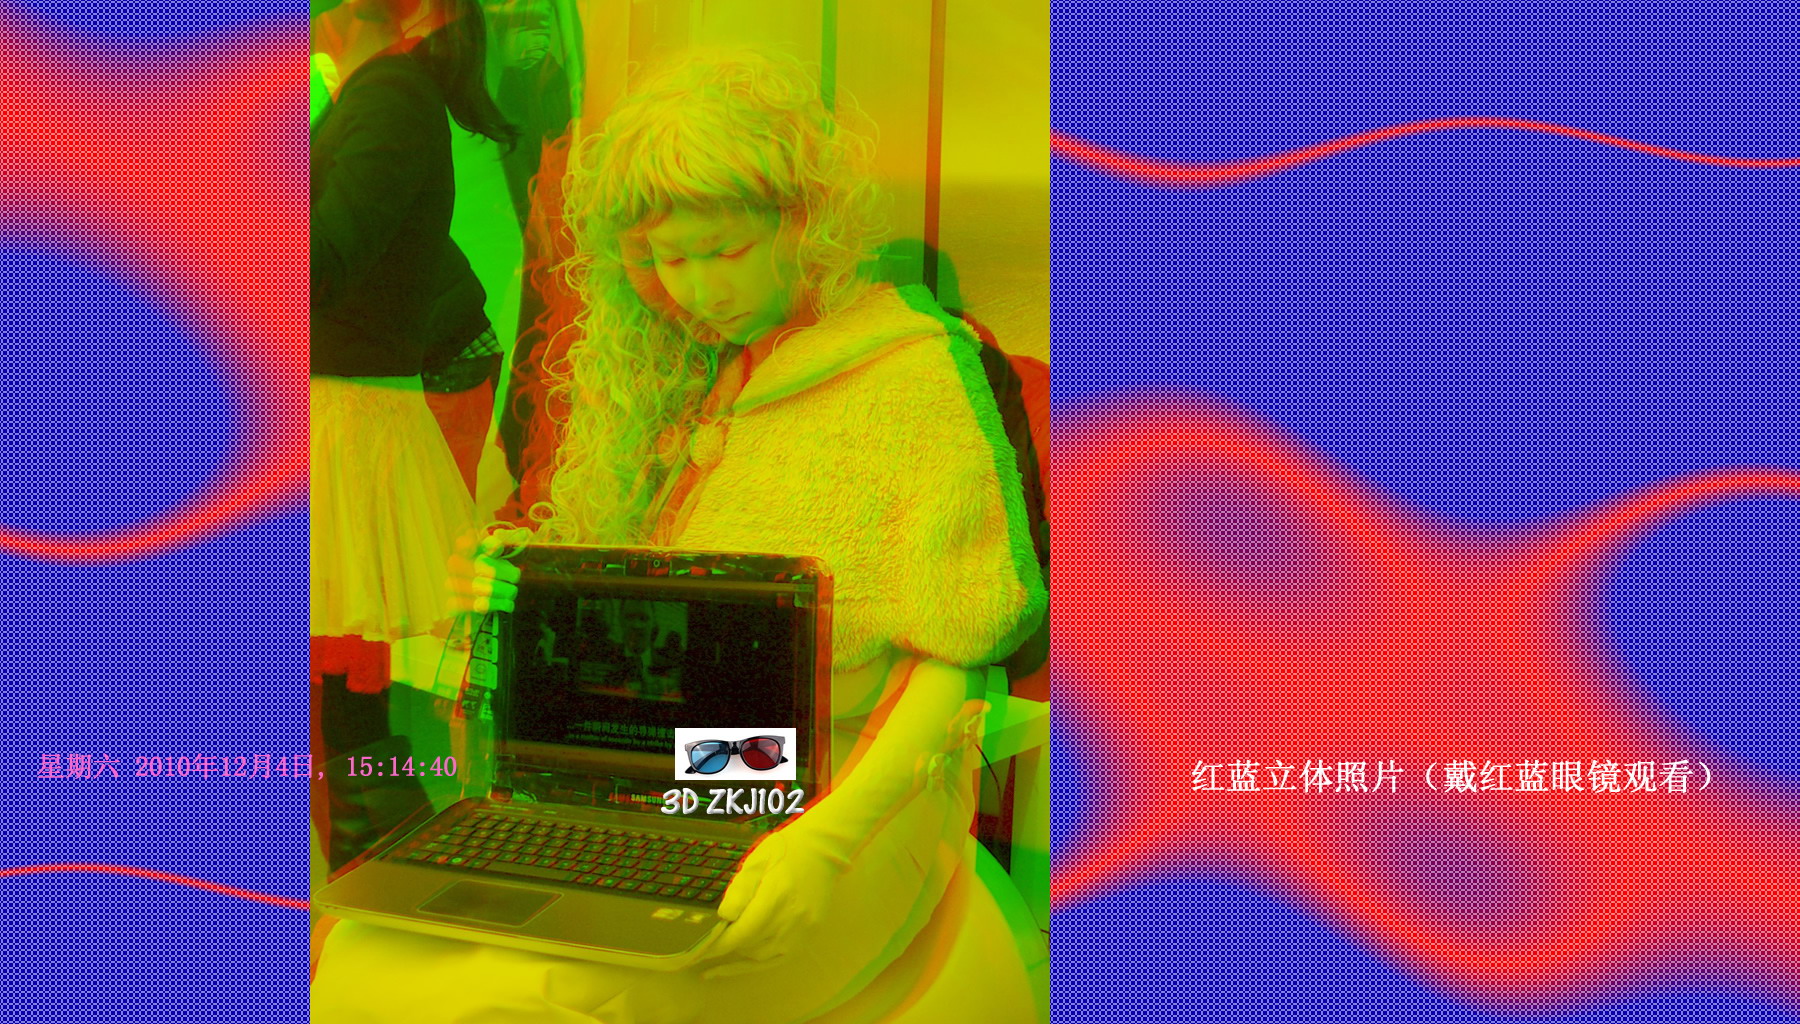 3d立体照片单机 三星-电脑-人 红蓝立体照片(戴红蓝眼镜观看)